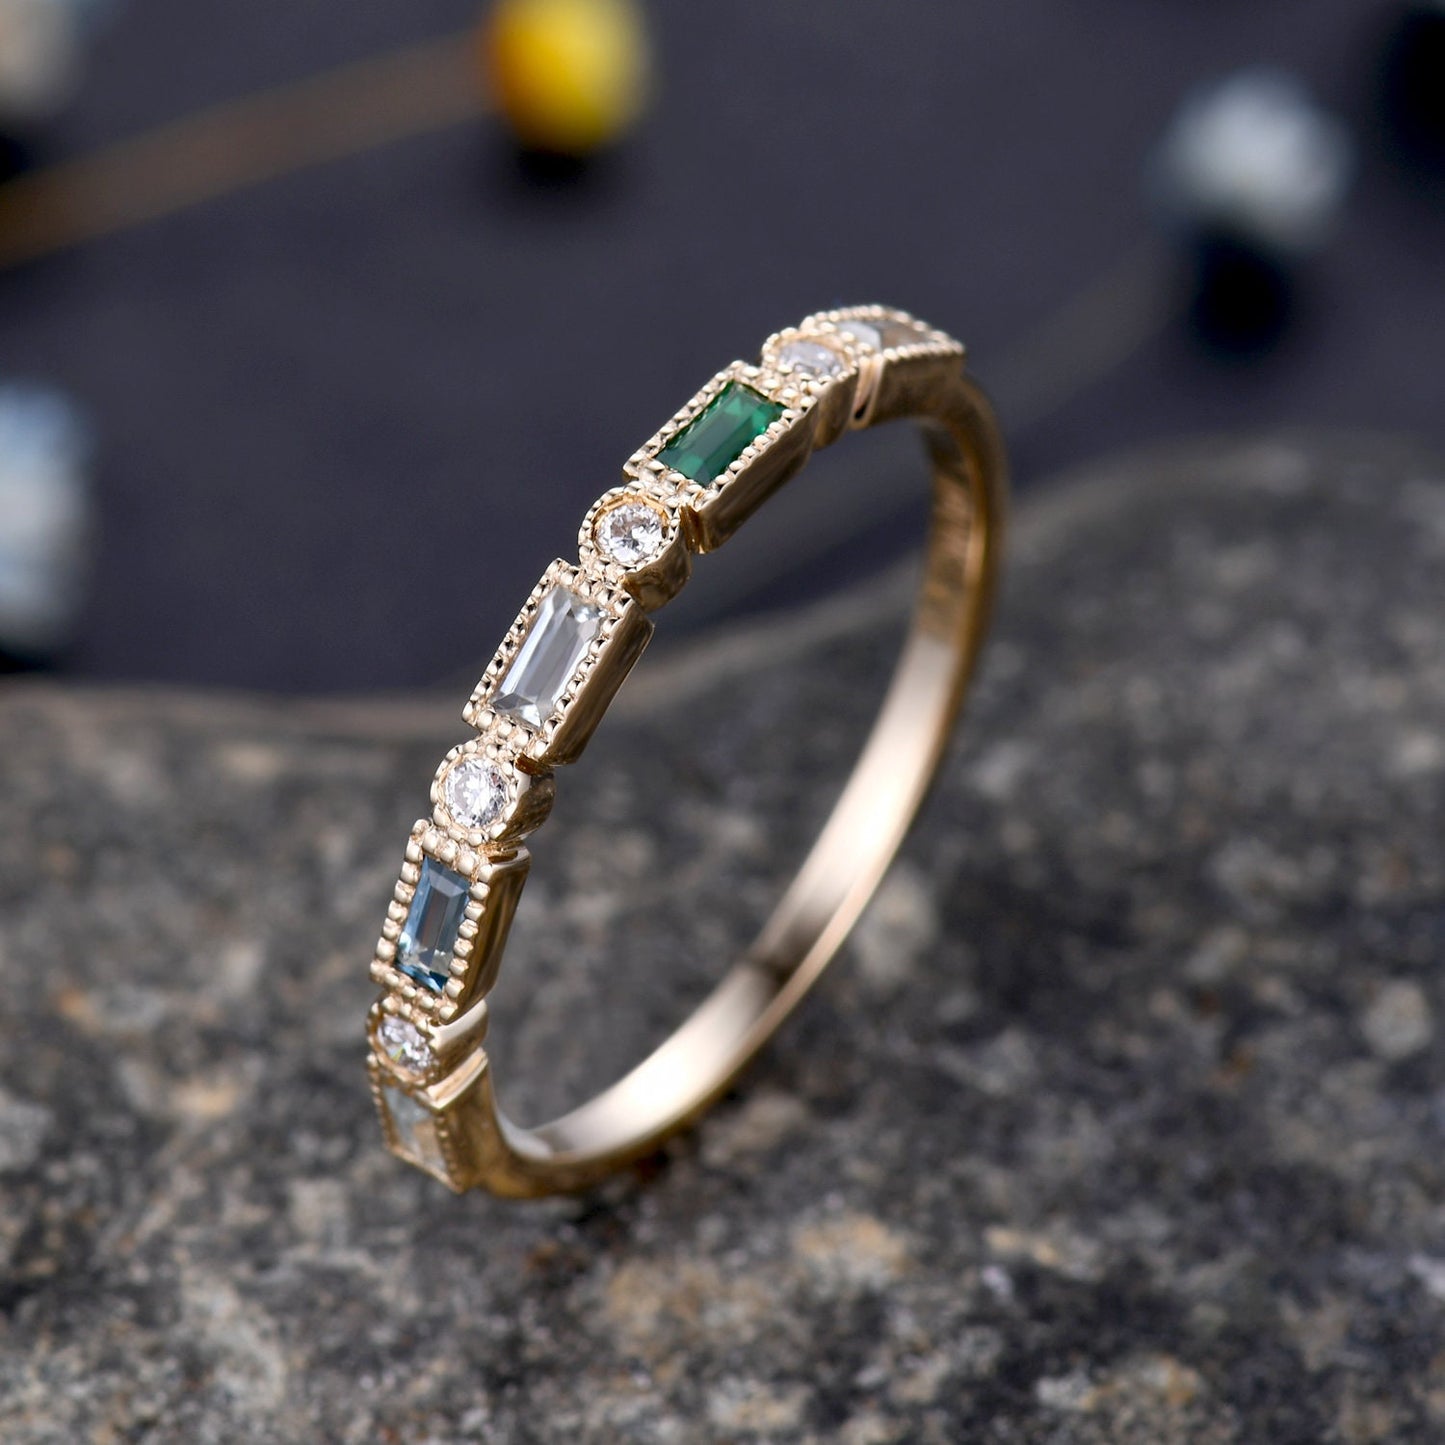 Multi gemstones Wedding band,Minimalist Birthstone Ring,Family Birthstone Ring,Baguette Cut Aquamarine,Emerald,London Blue Topaz,Customized